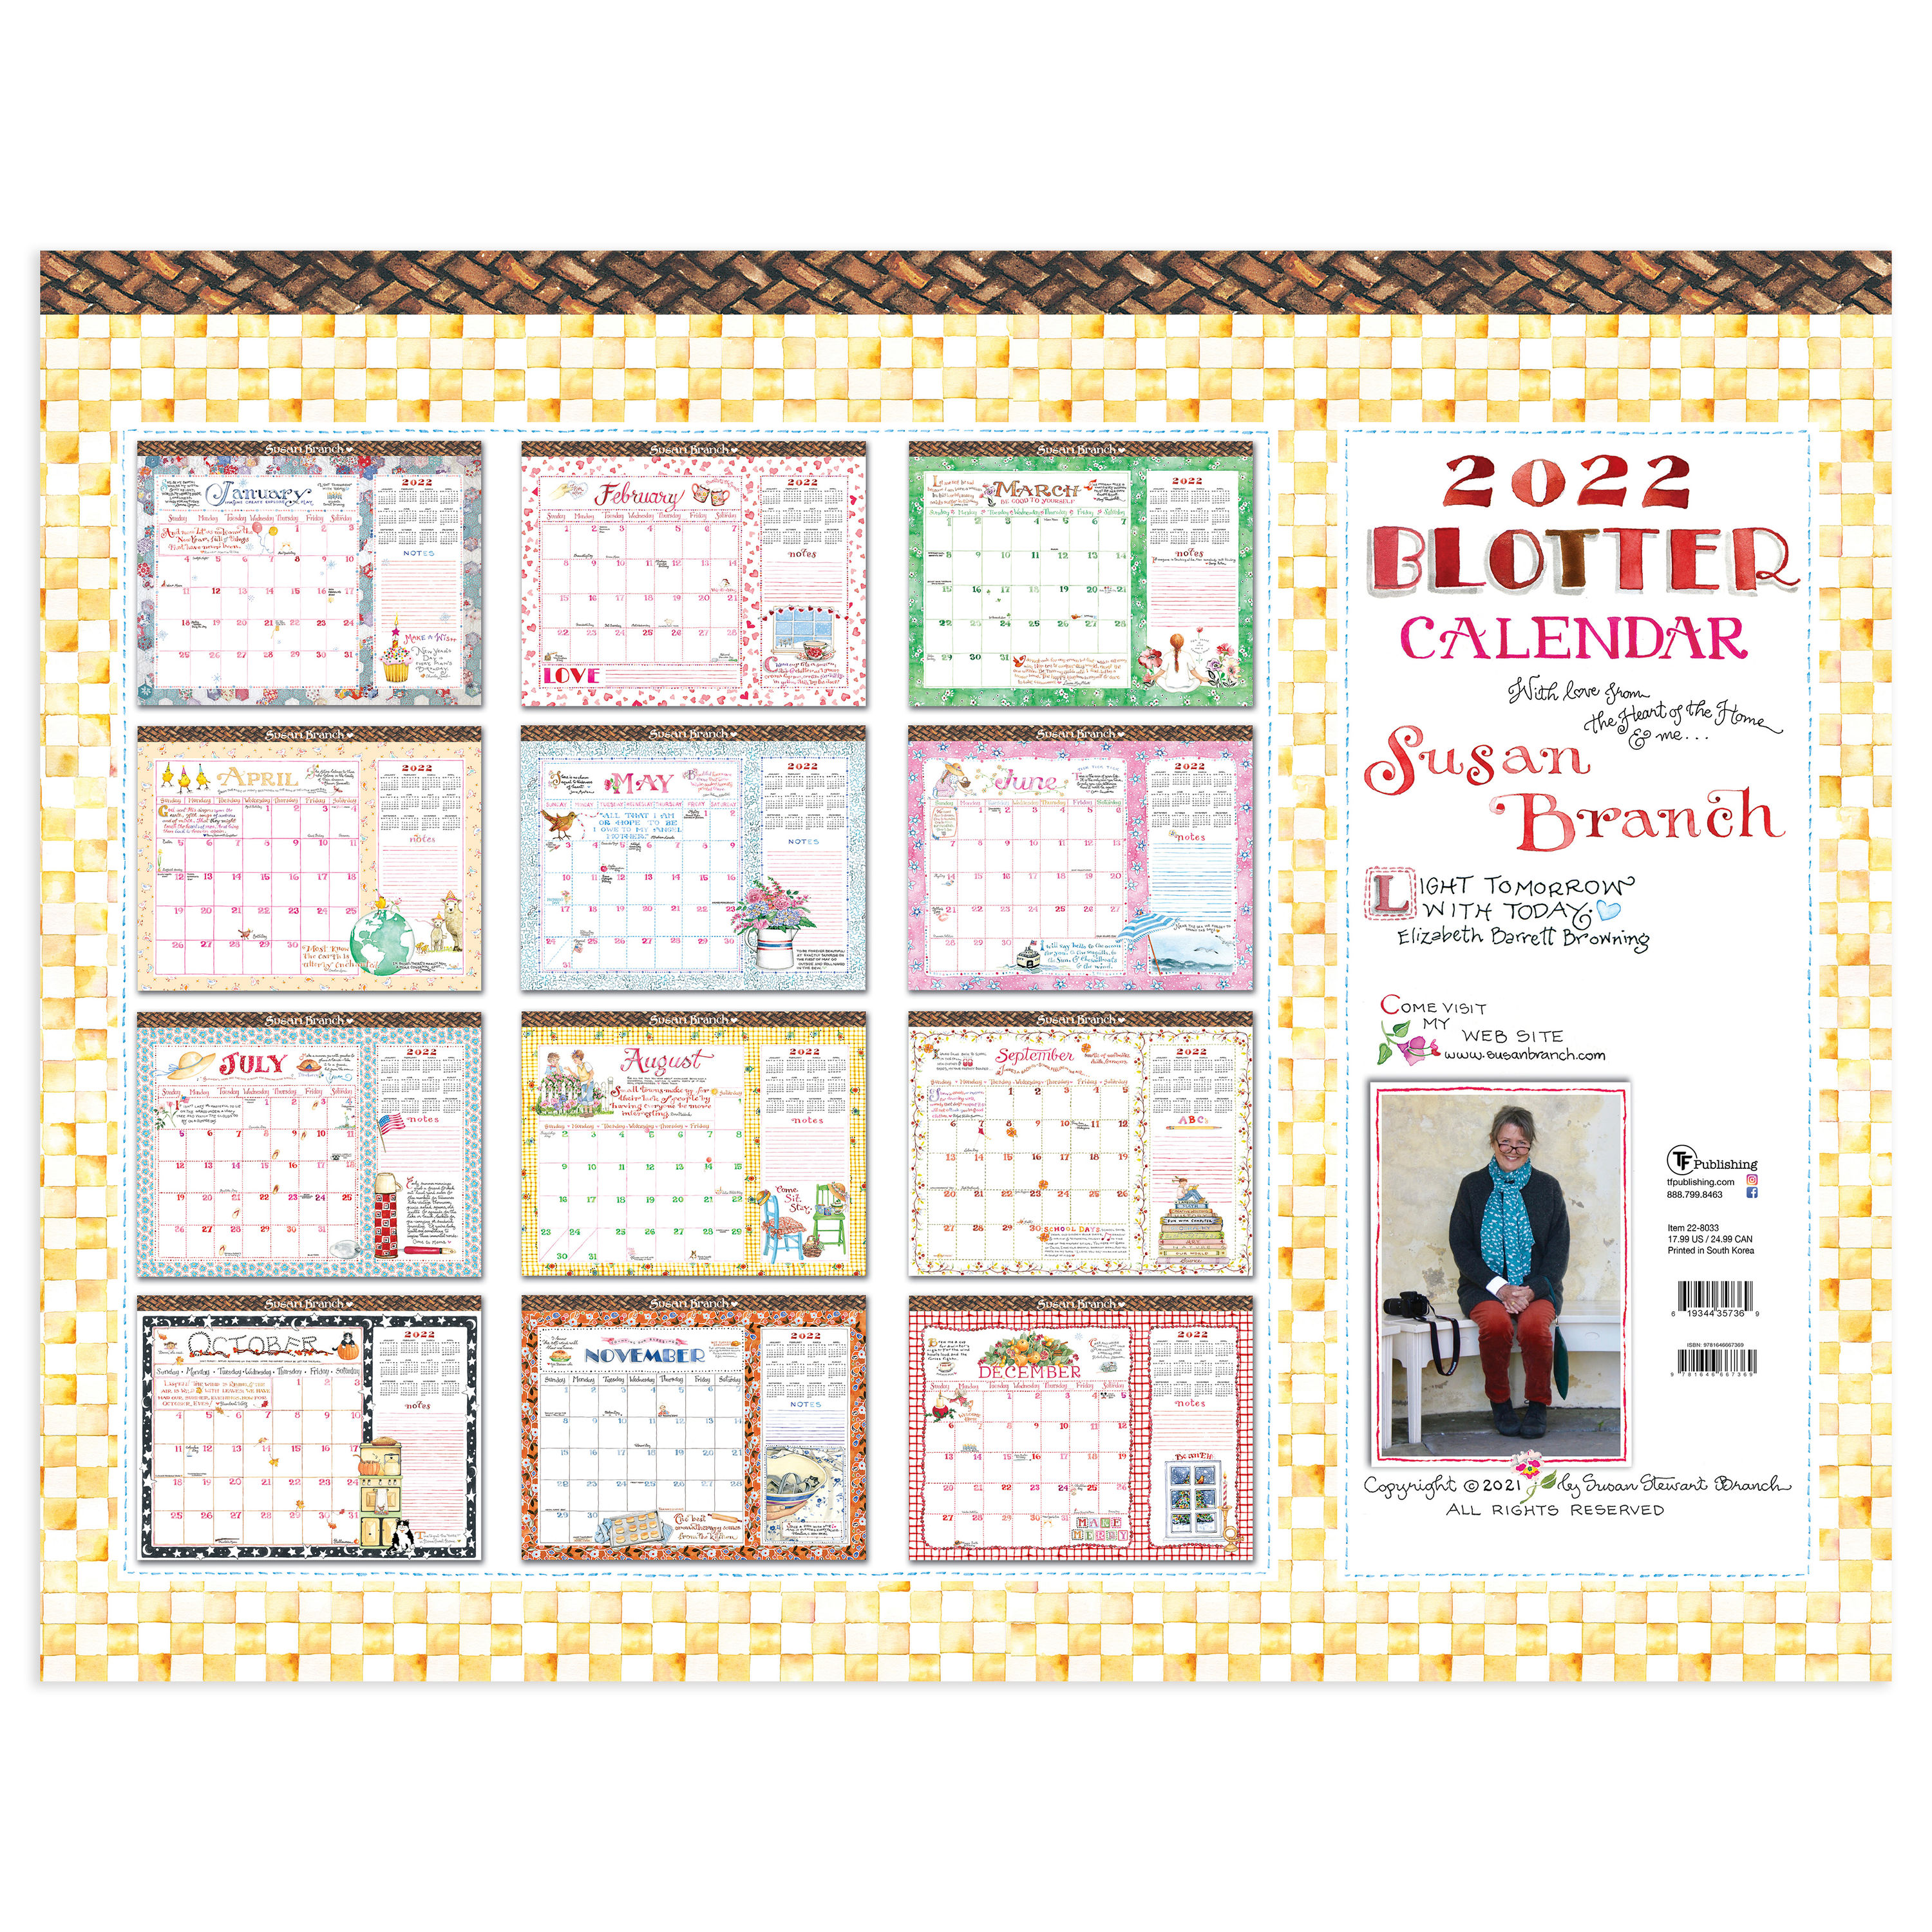 TF Publishing 2022 Susan Branch Desk Pad Monthly Blotter Calendar in